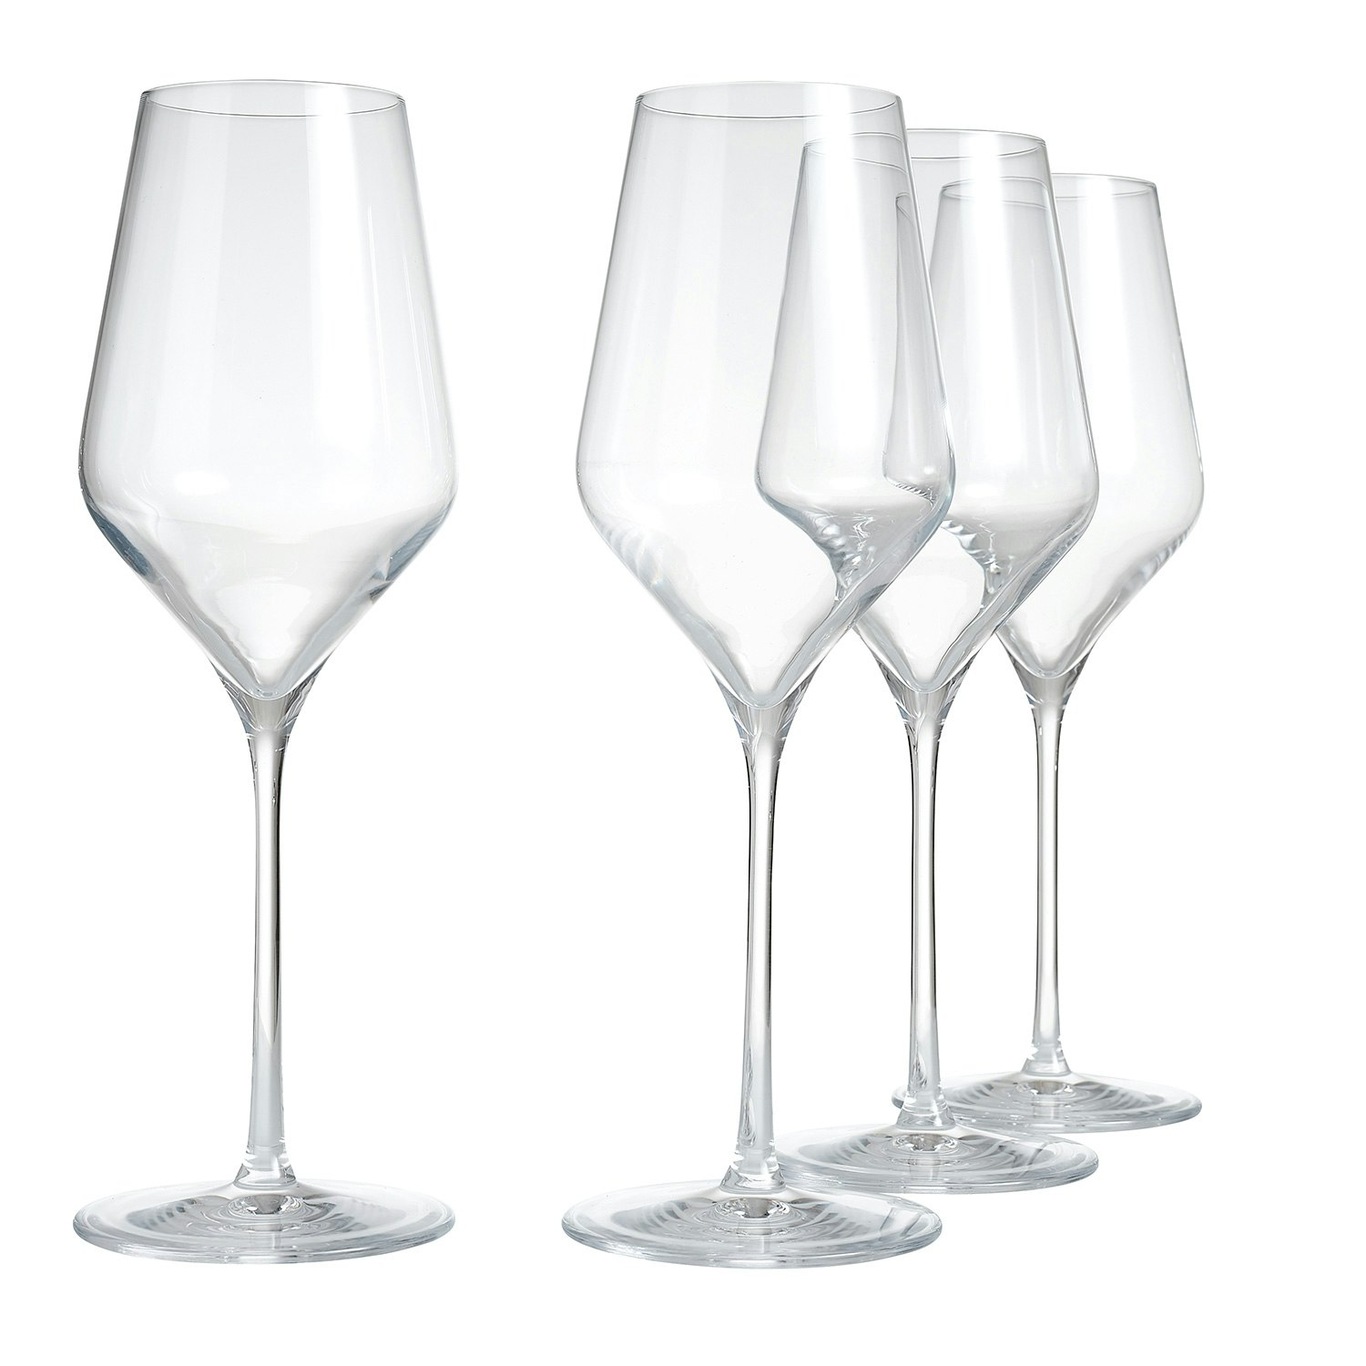 https://royaldesign.com/image/2/aida-connoisseur-extravagant-white-wine-glass-645-cl-4-pack-0?w=800&quality=80